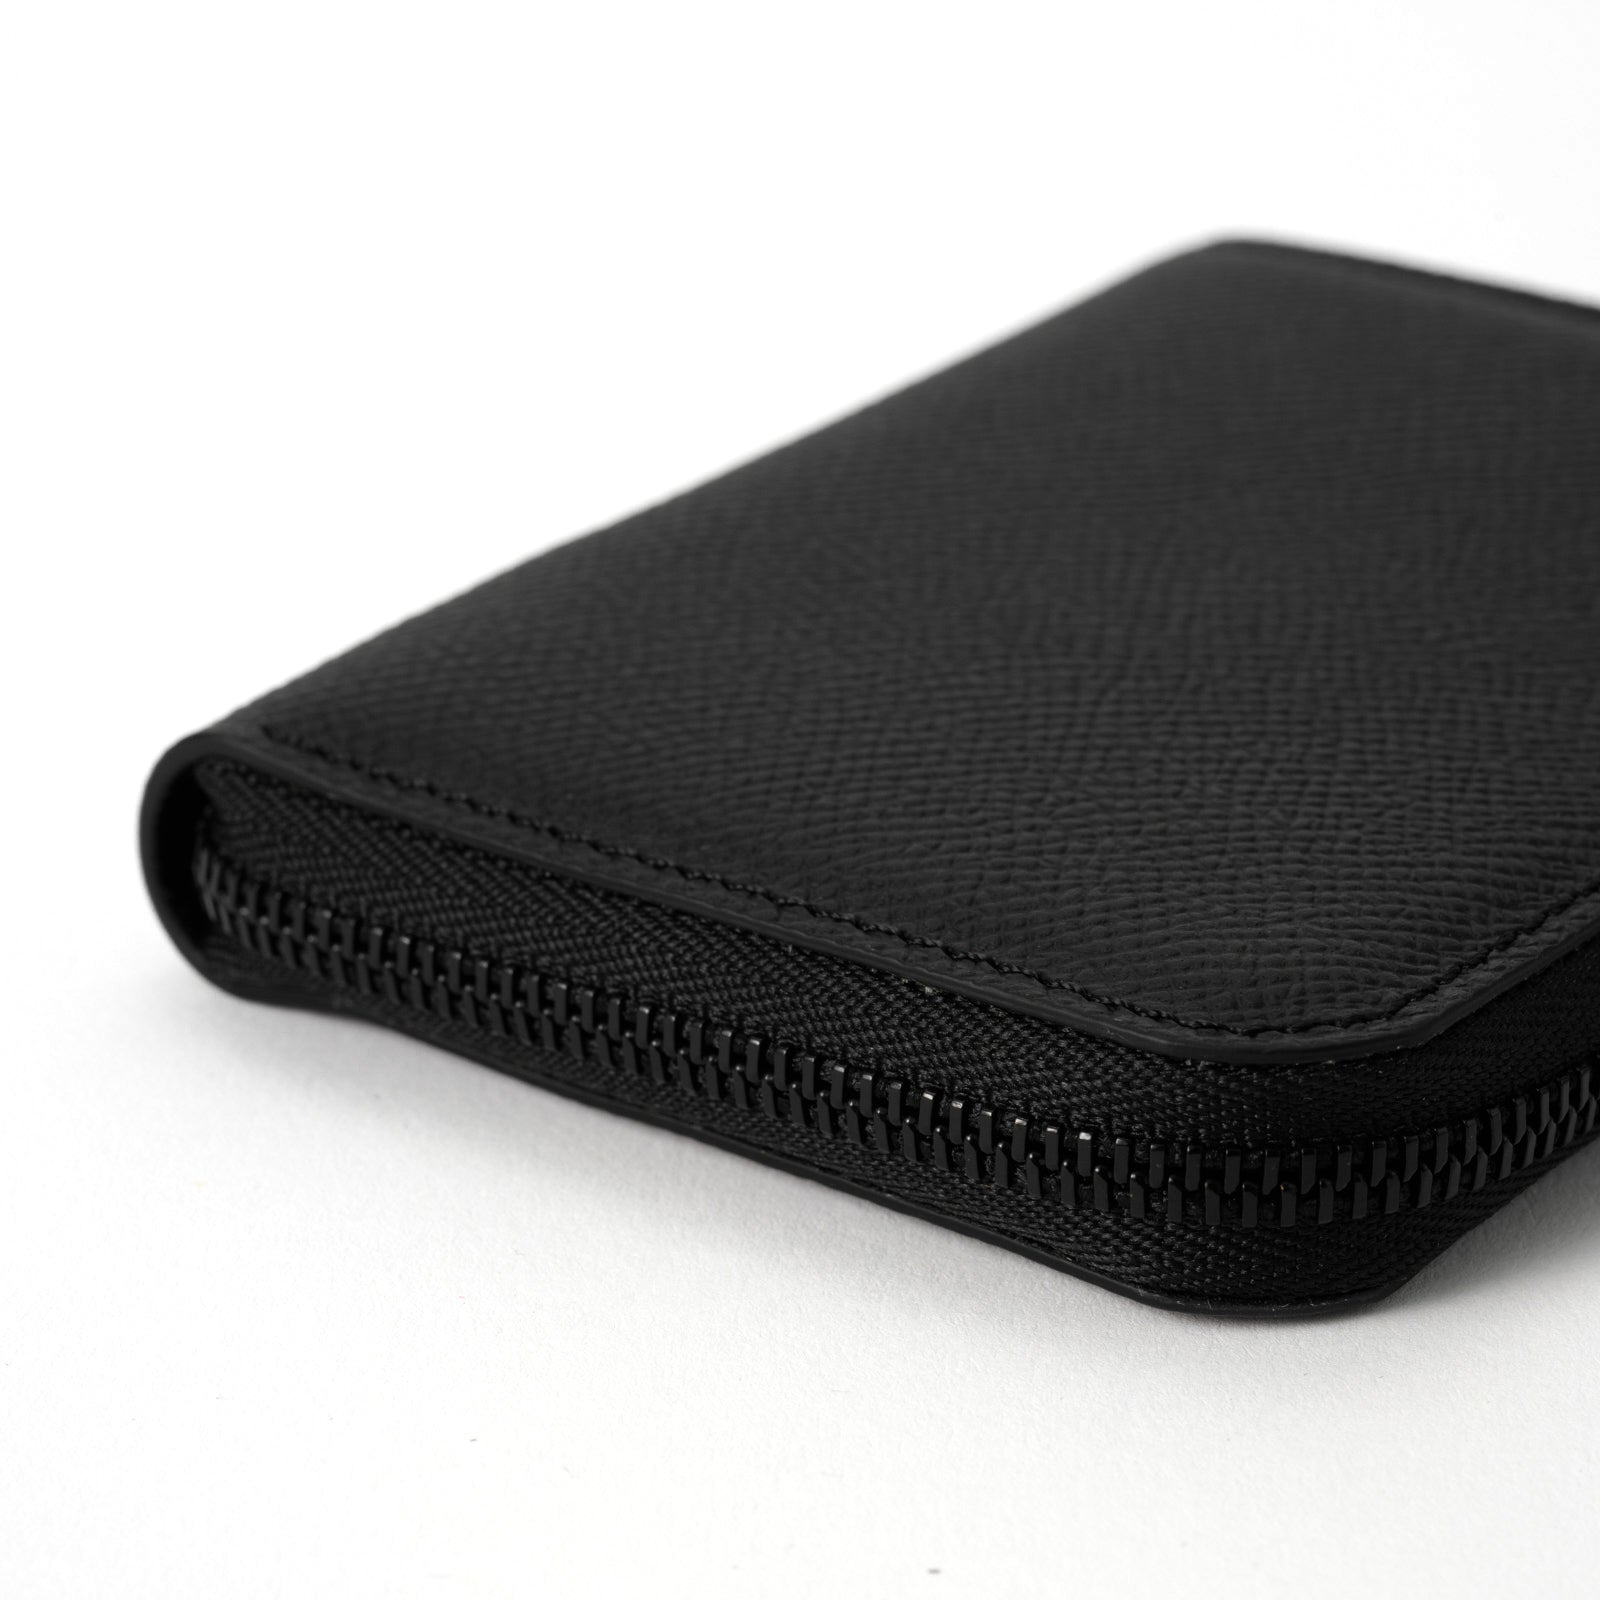 Minimum wallet with L shaped fastener / Veau Epsom